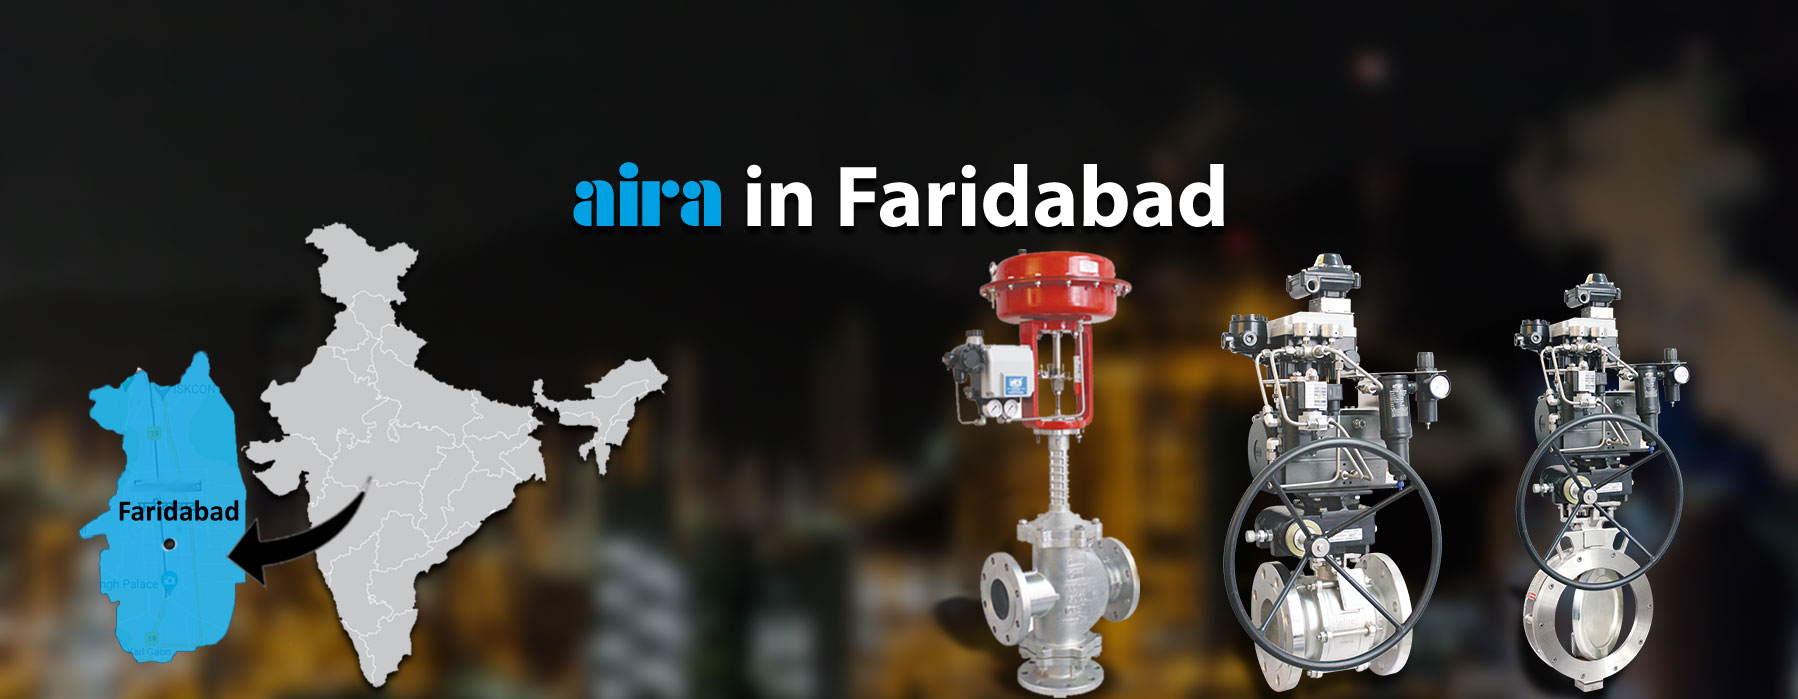 aira in Faridabad